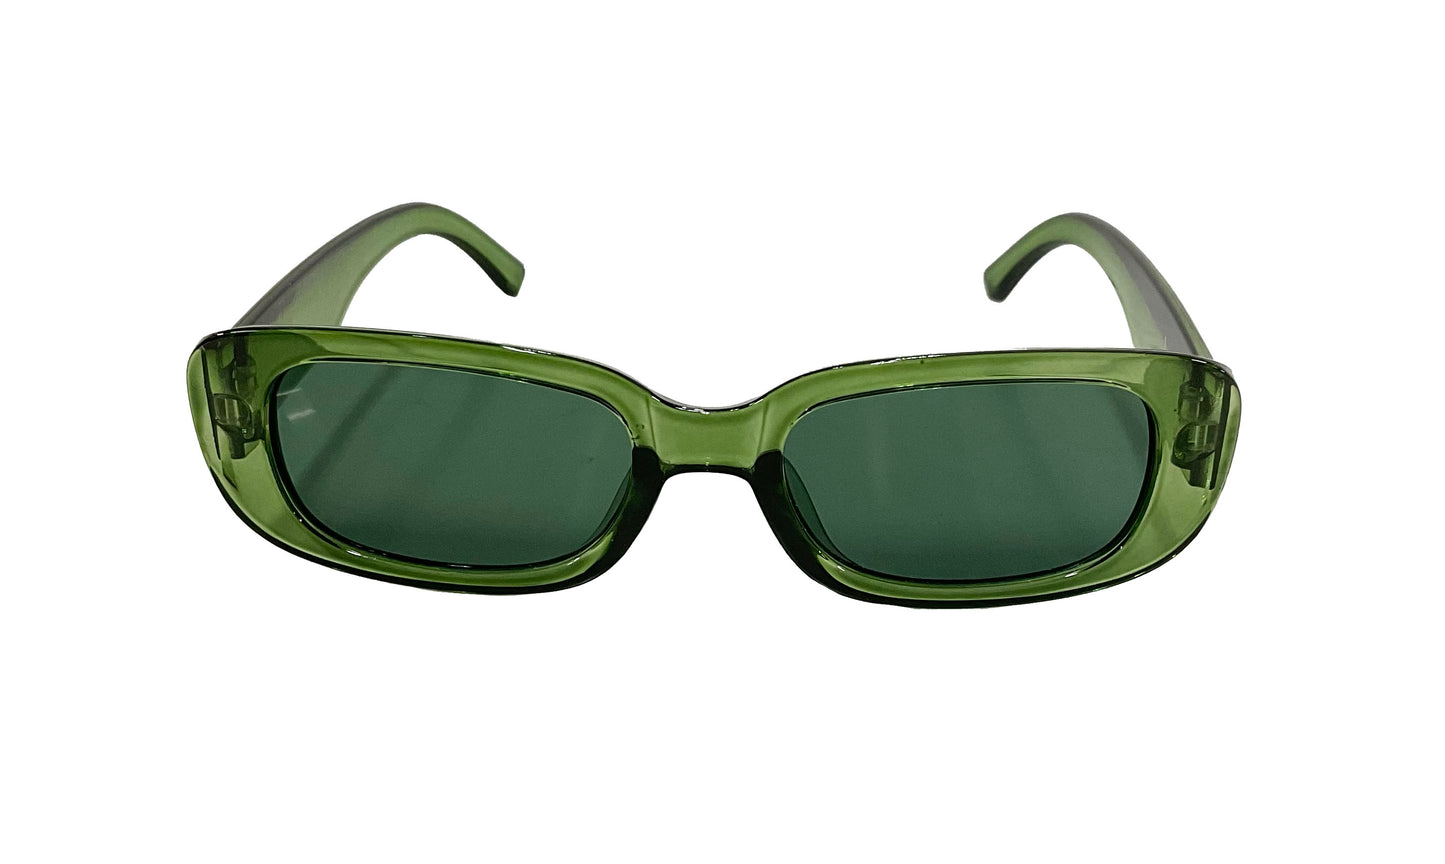 Sunglasses #59-4024